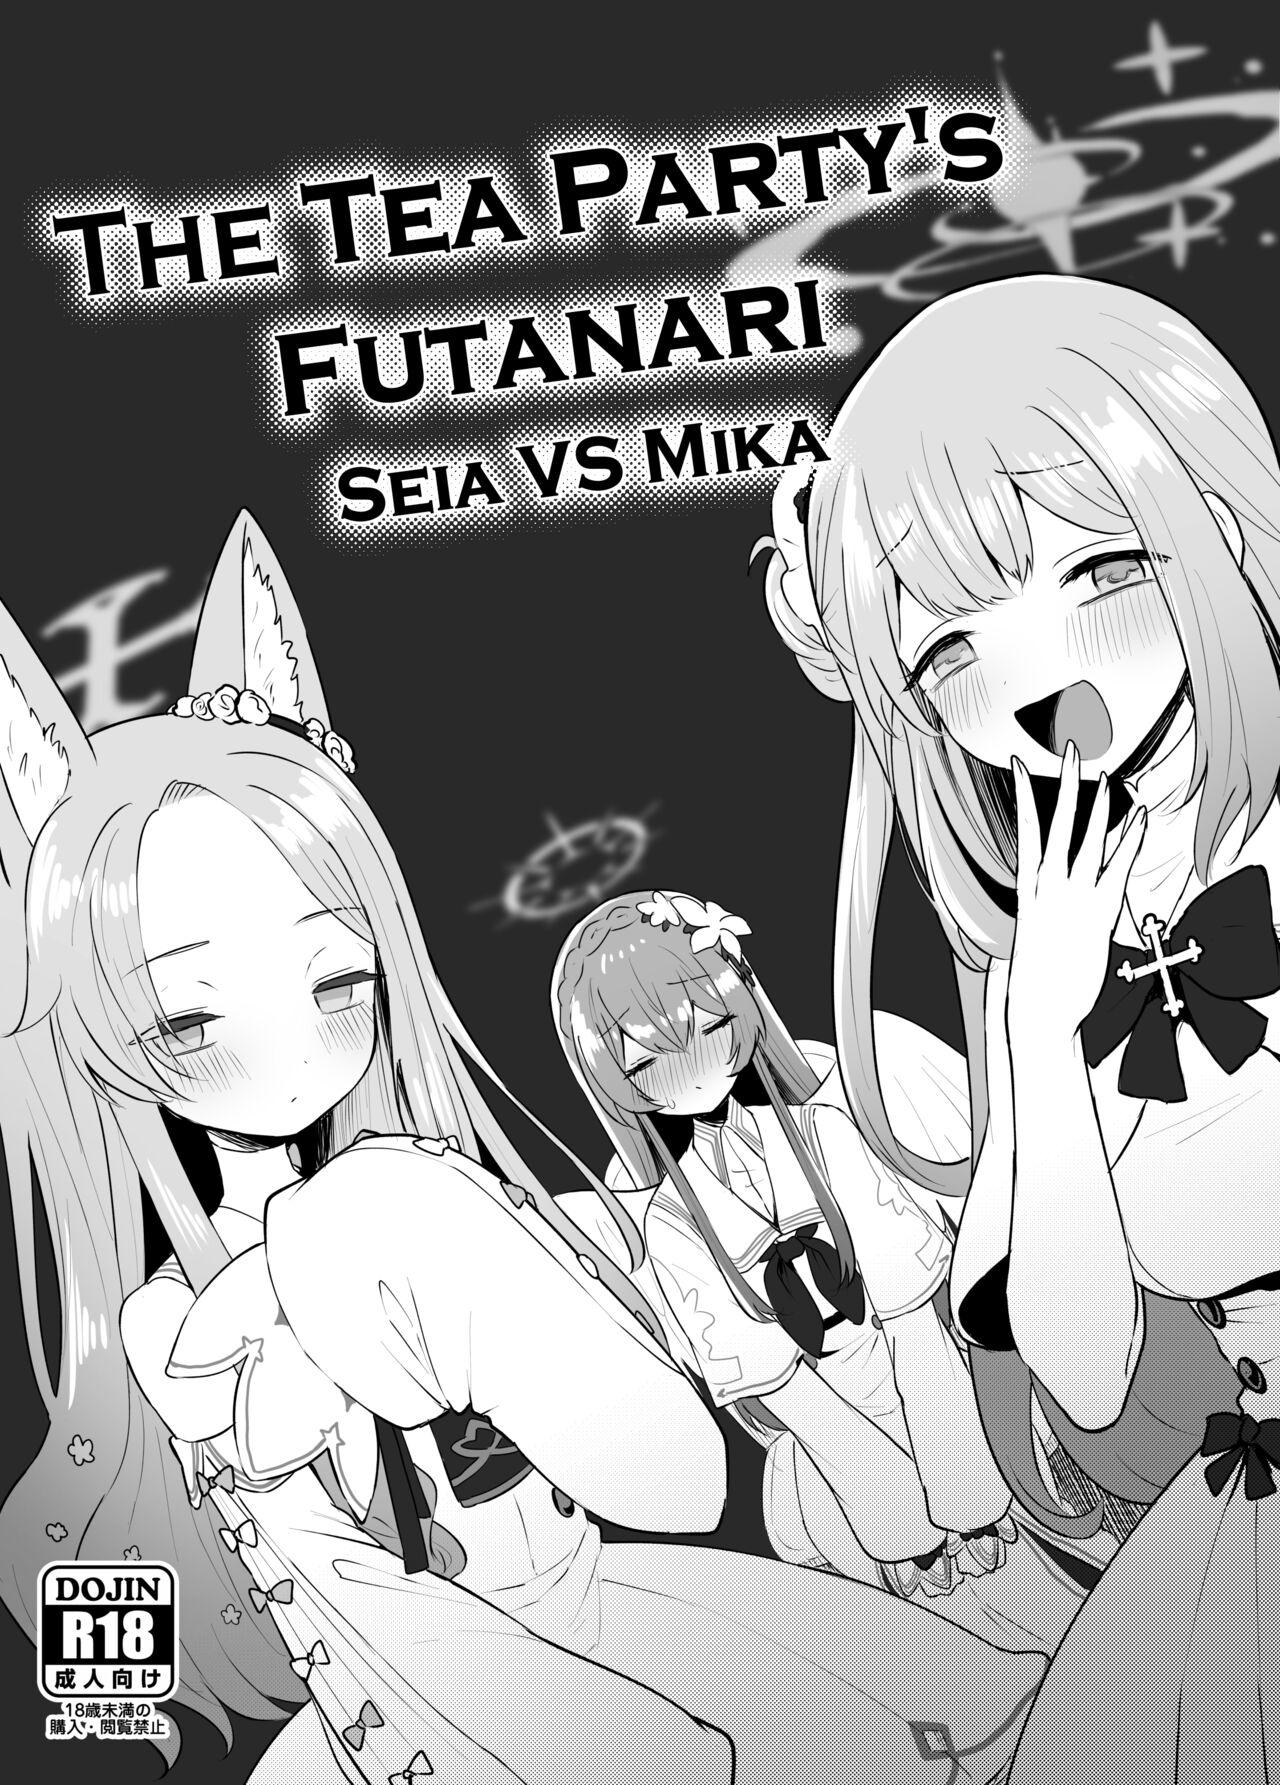 The Tea Party's Futanari - Seia VS Mika 1